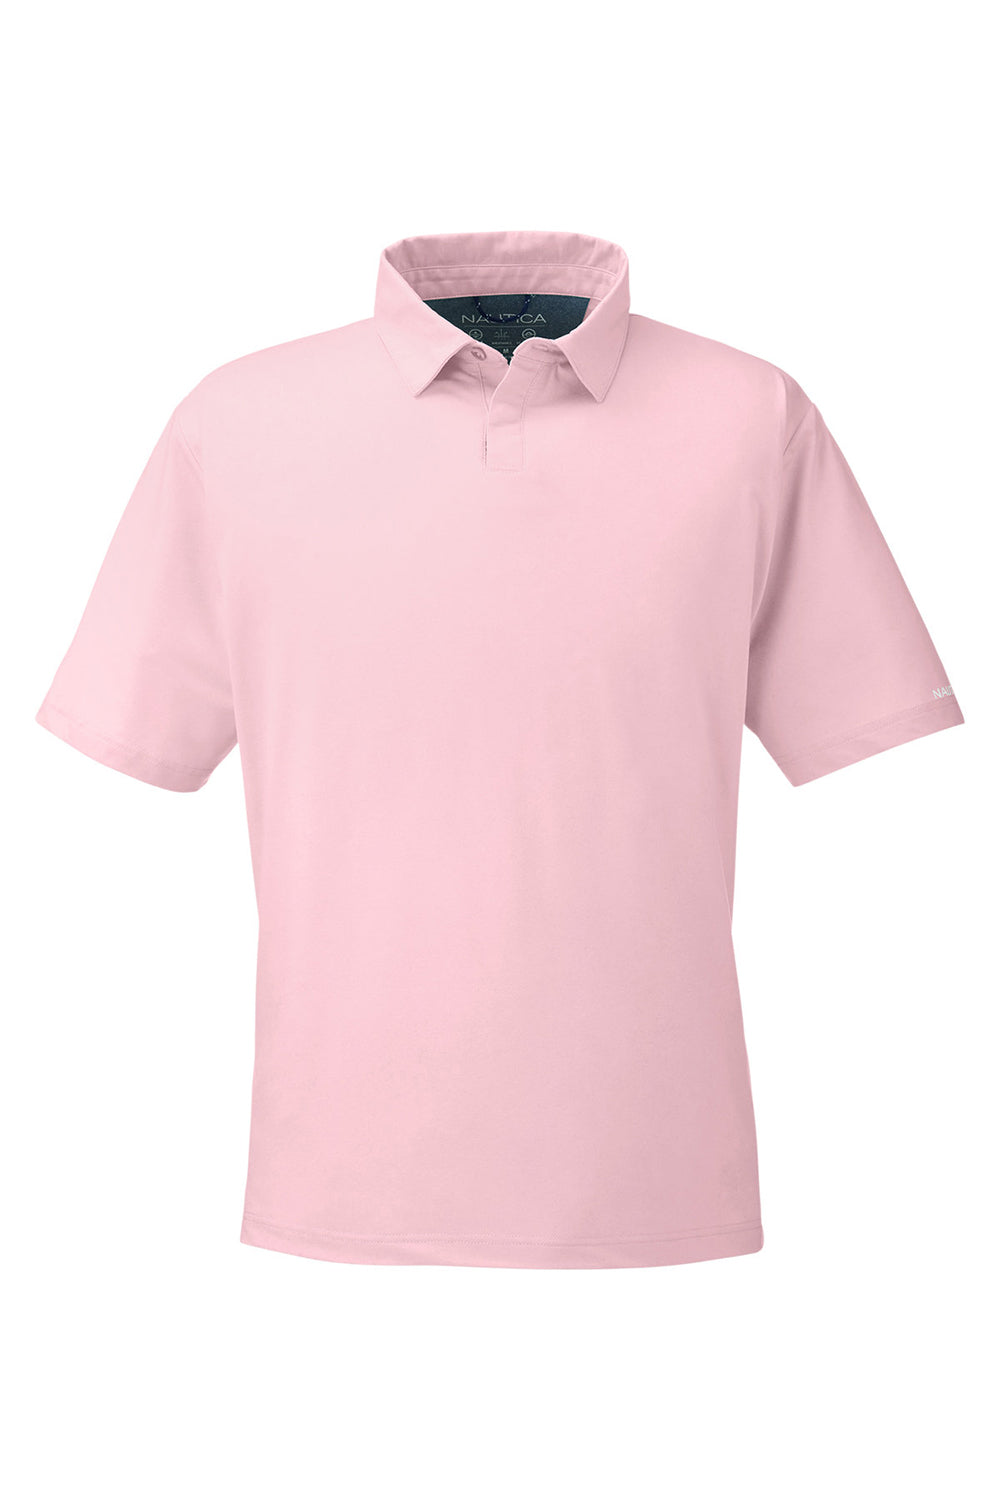 Nautica N17922 Mens Saltwater Short Sleeve Polo Shirt Sunset Pink Flat Front